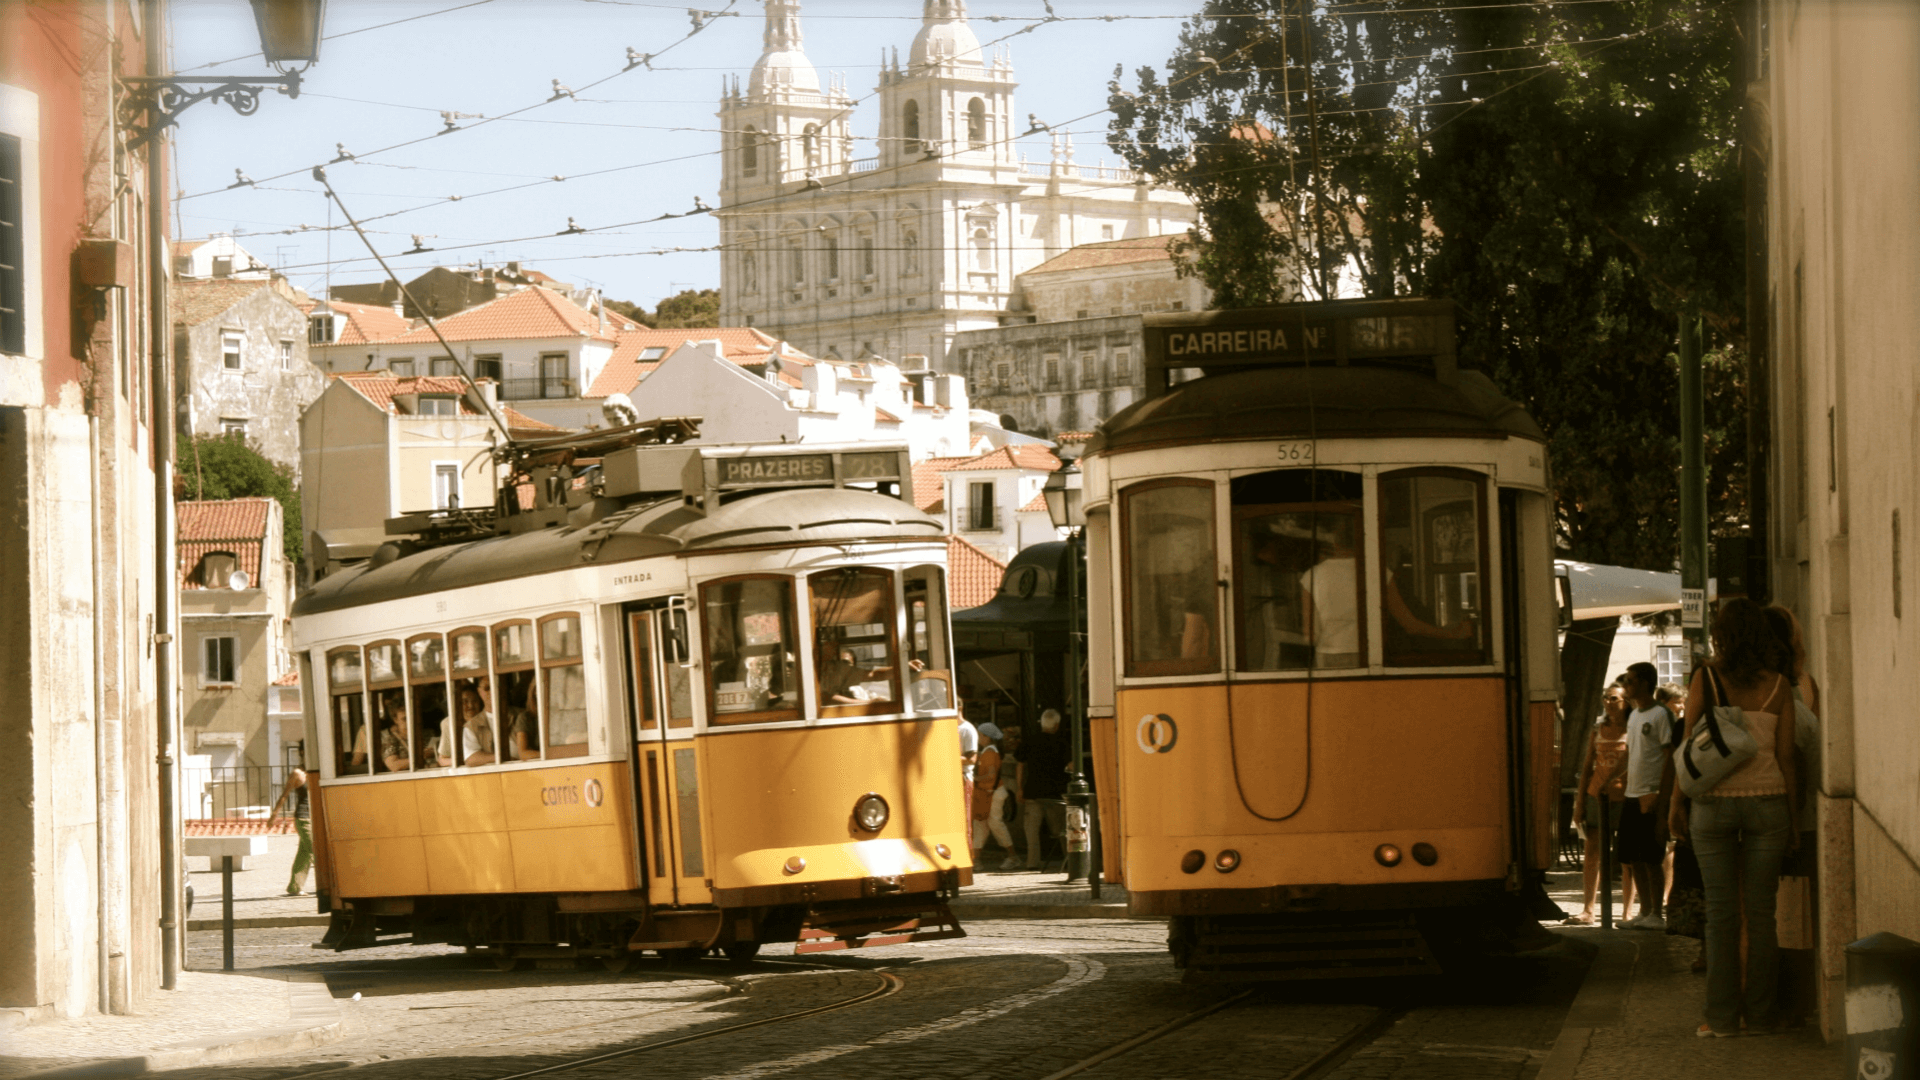 Photo by Porto on unsplash